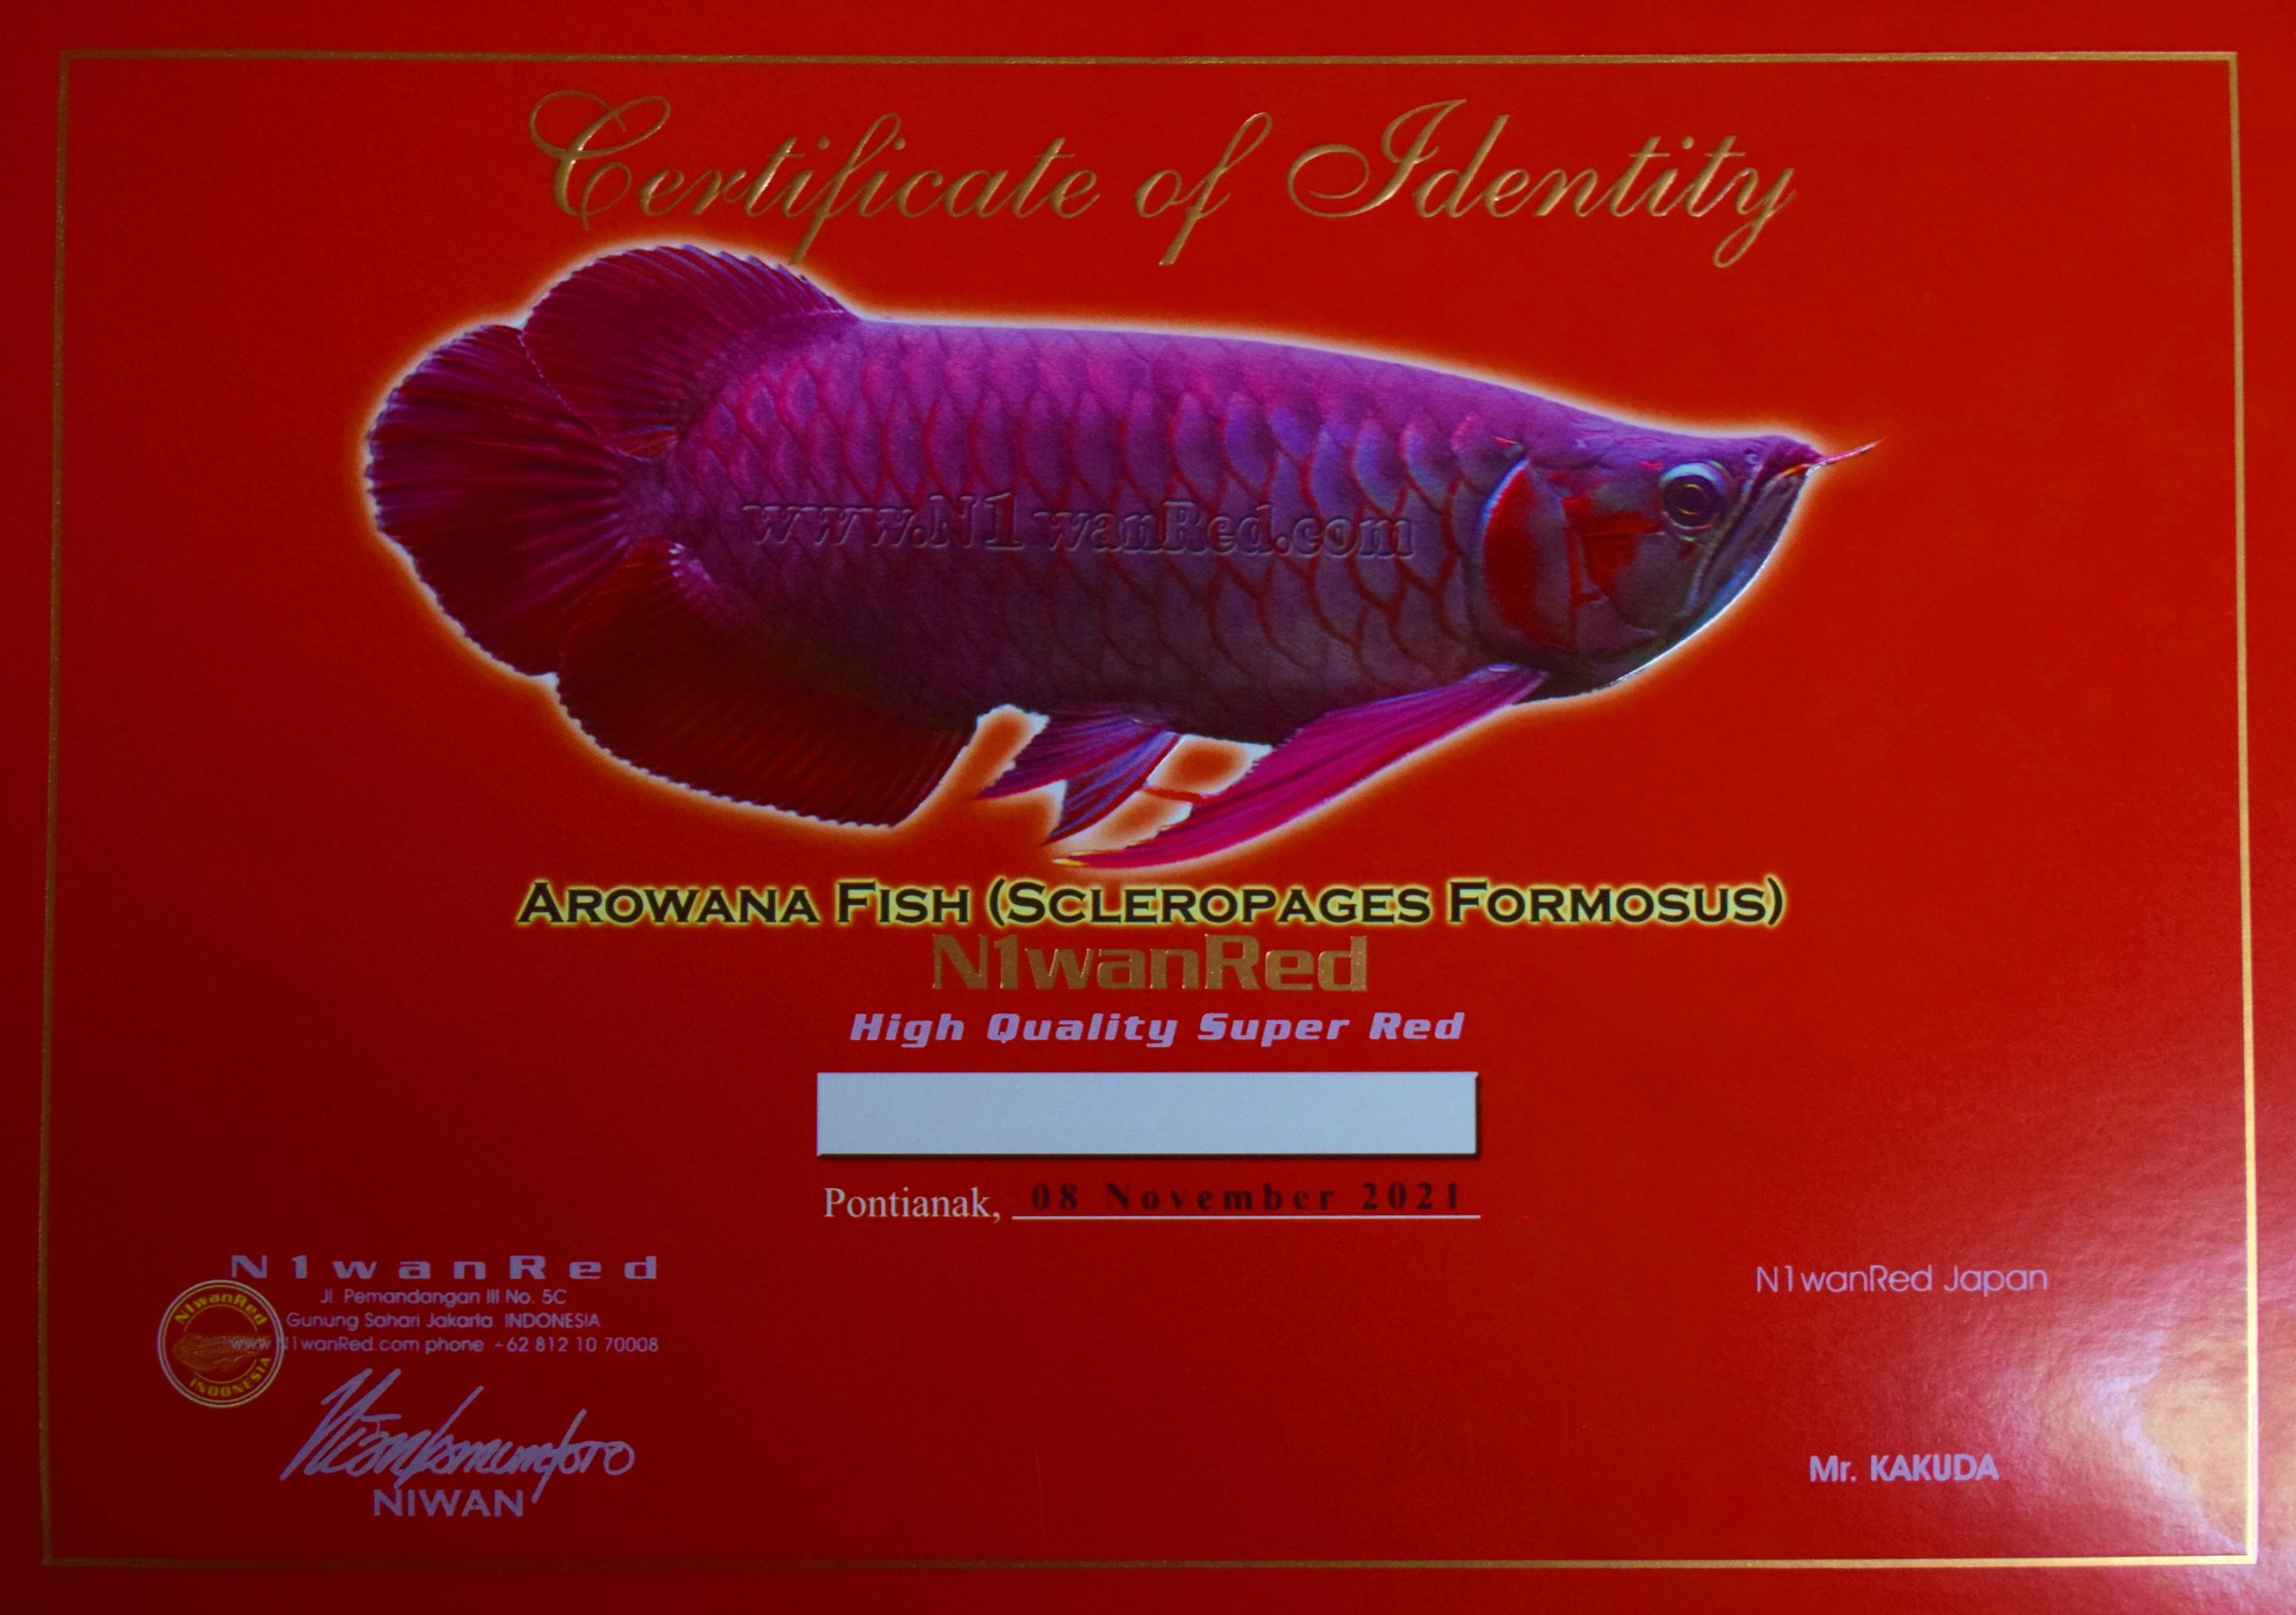 Certificate of Identify